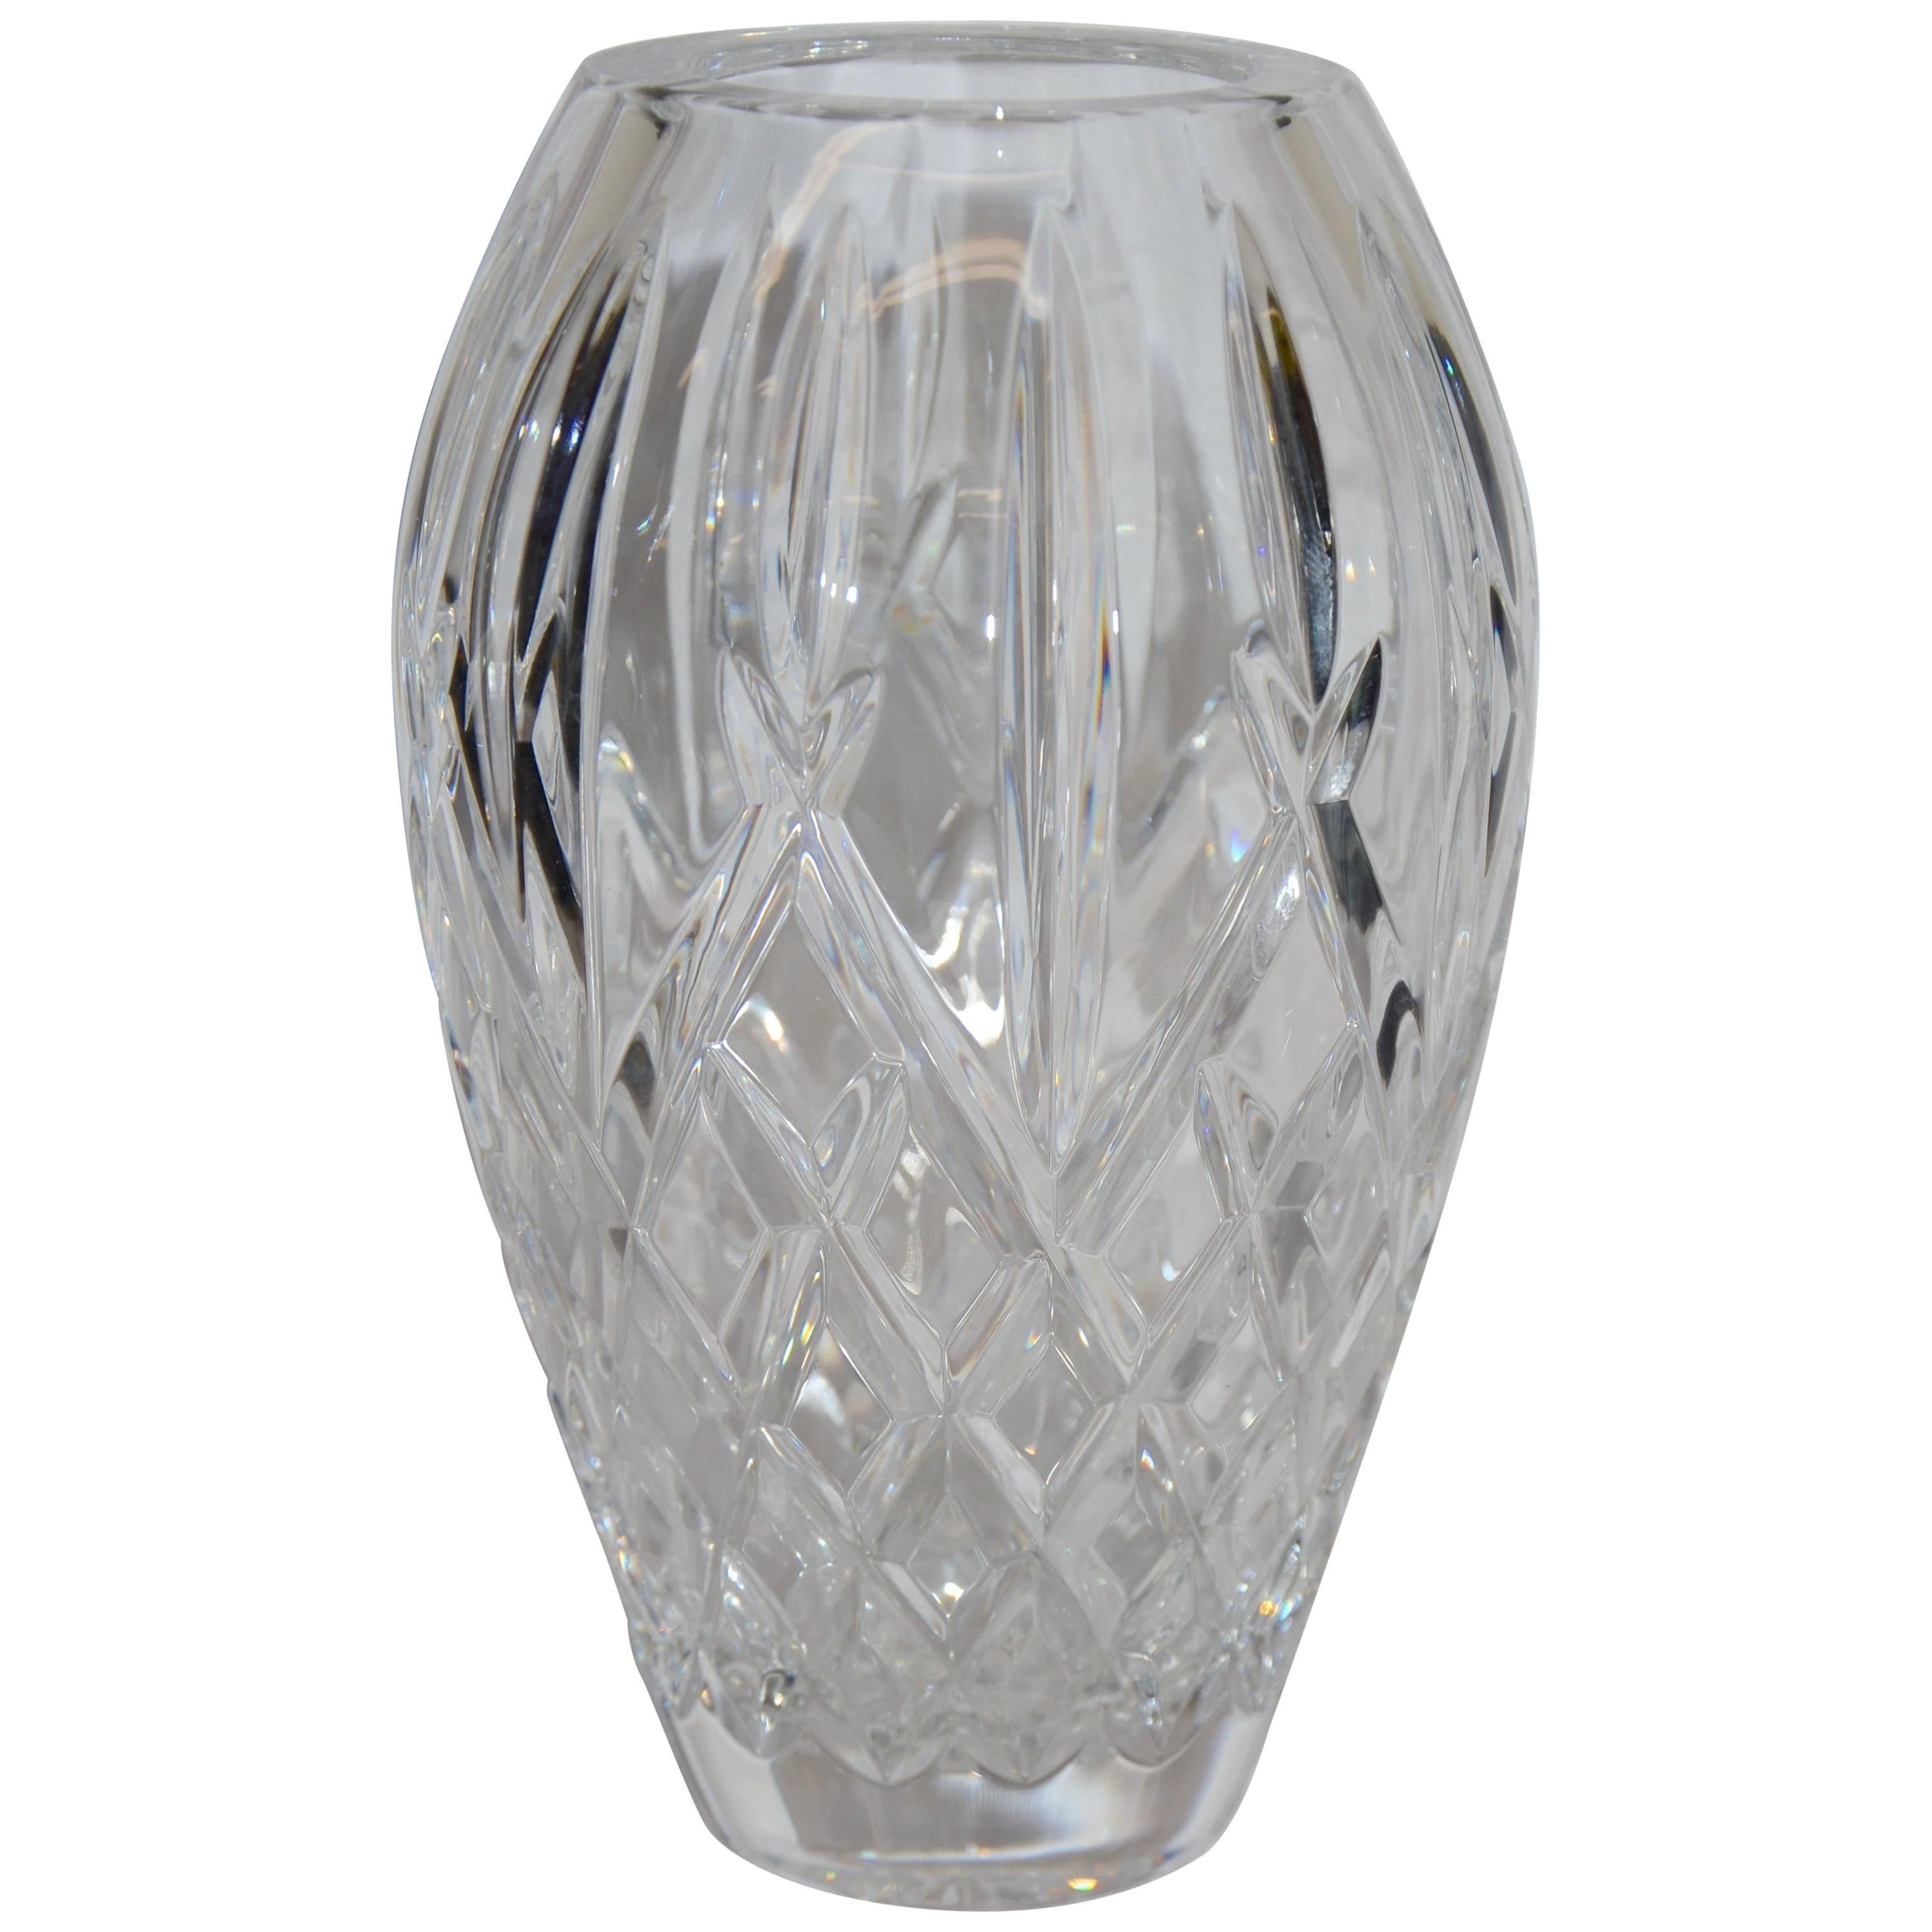 Heavy Cut Crystal Diamond Pattern Waterford Vase Signed Sinead Christian, 1999